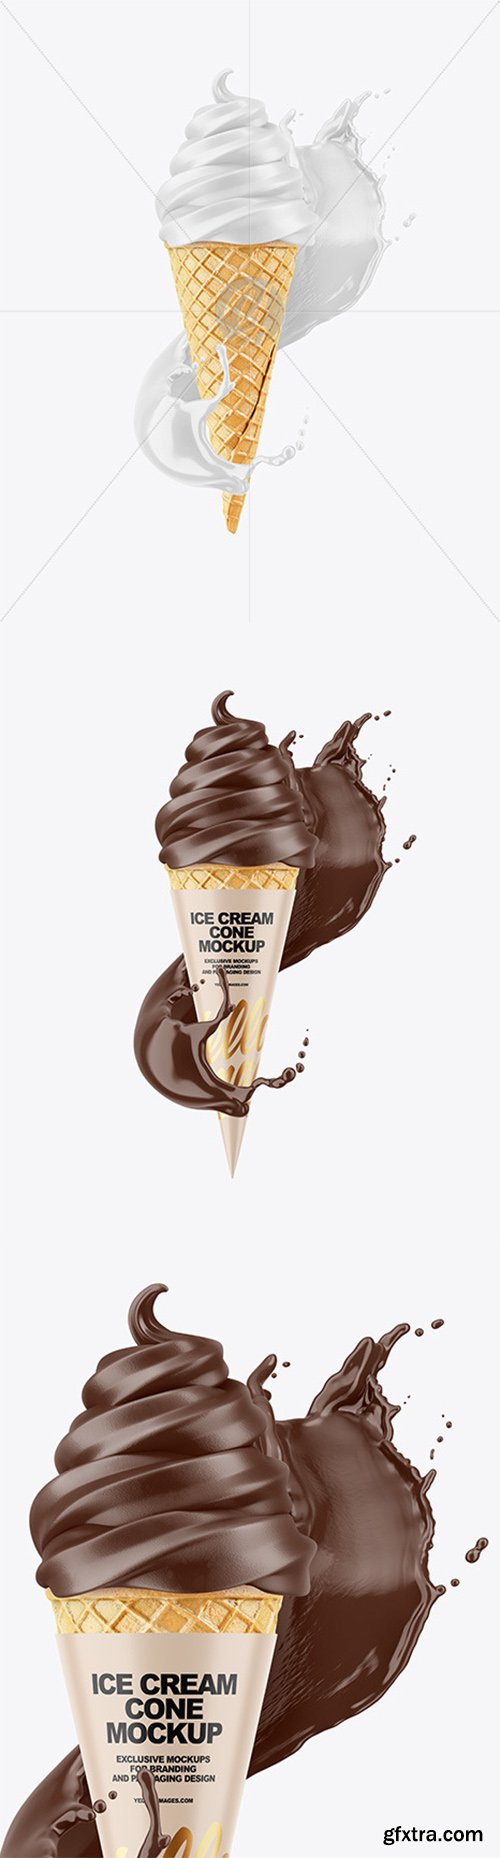 Ice Cream Cone with Splash Mockup 61528